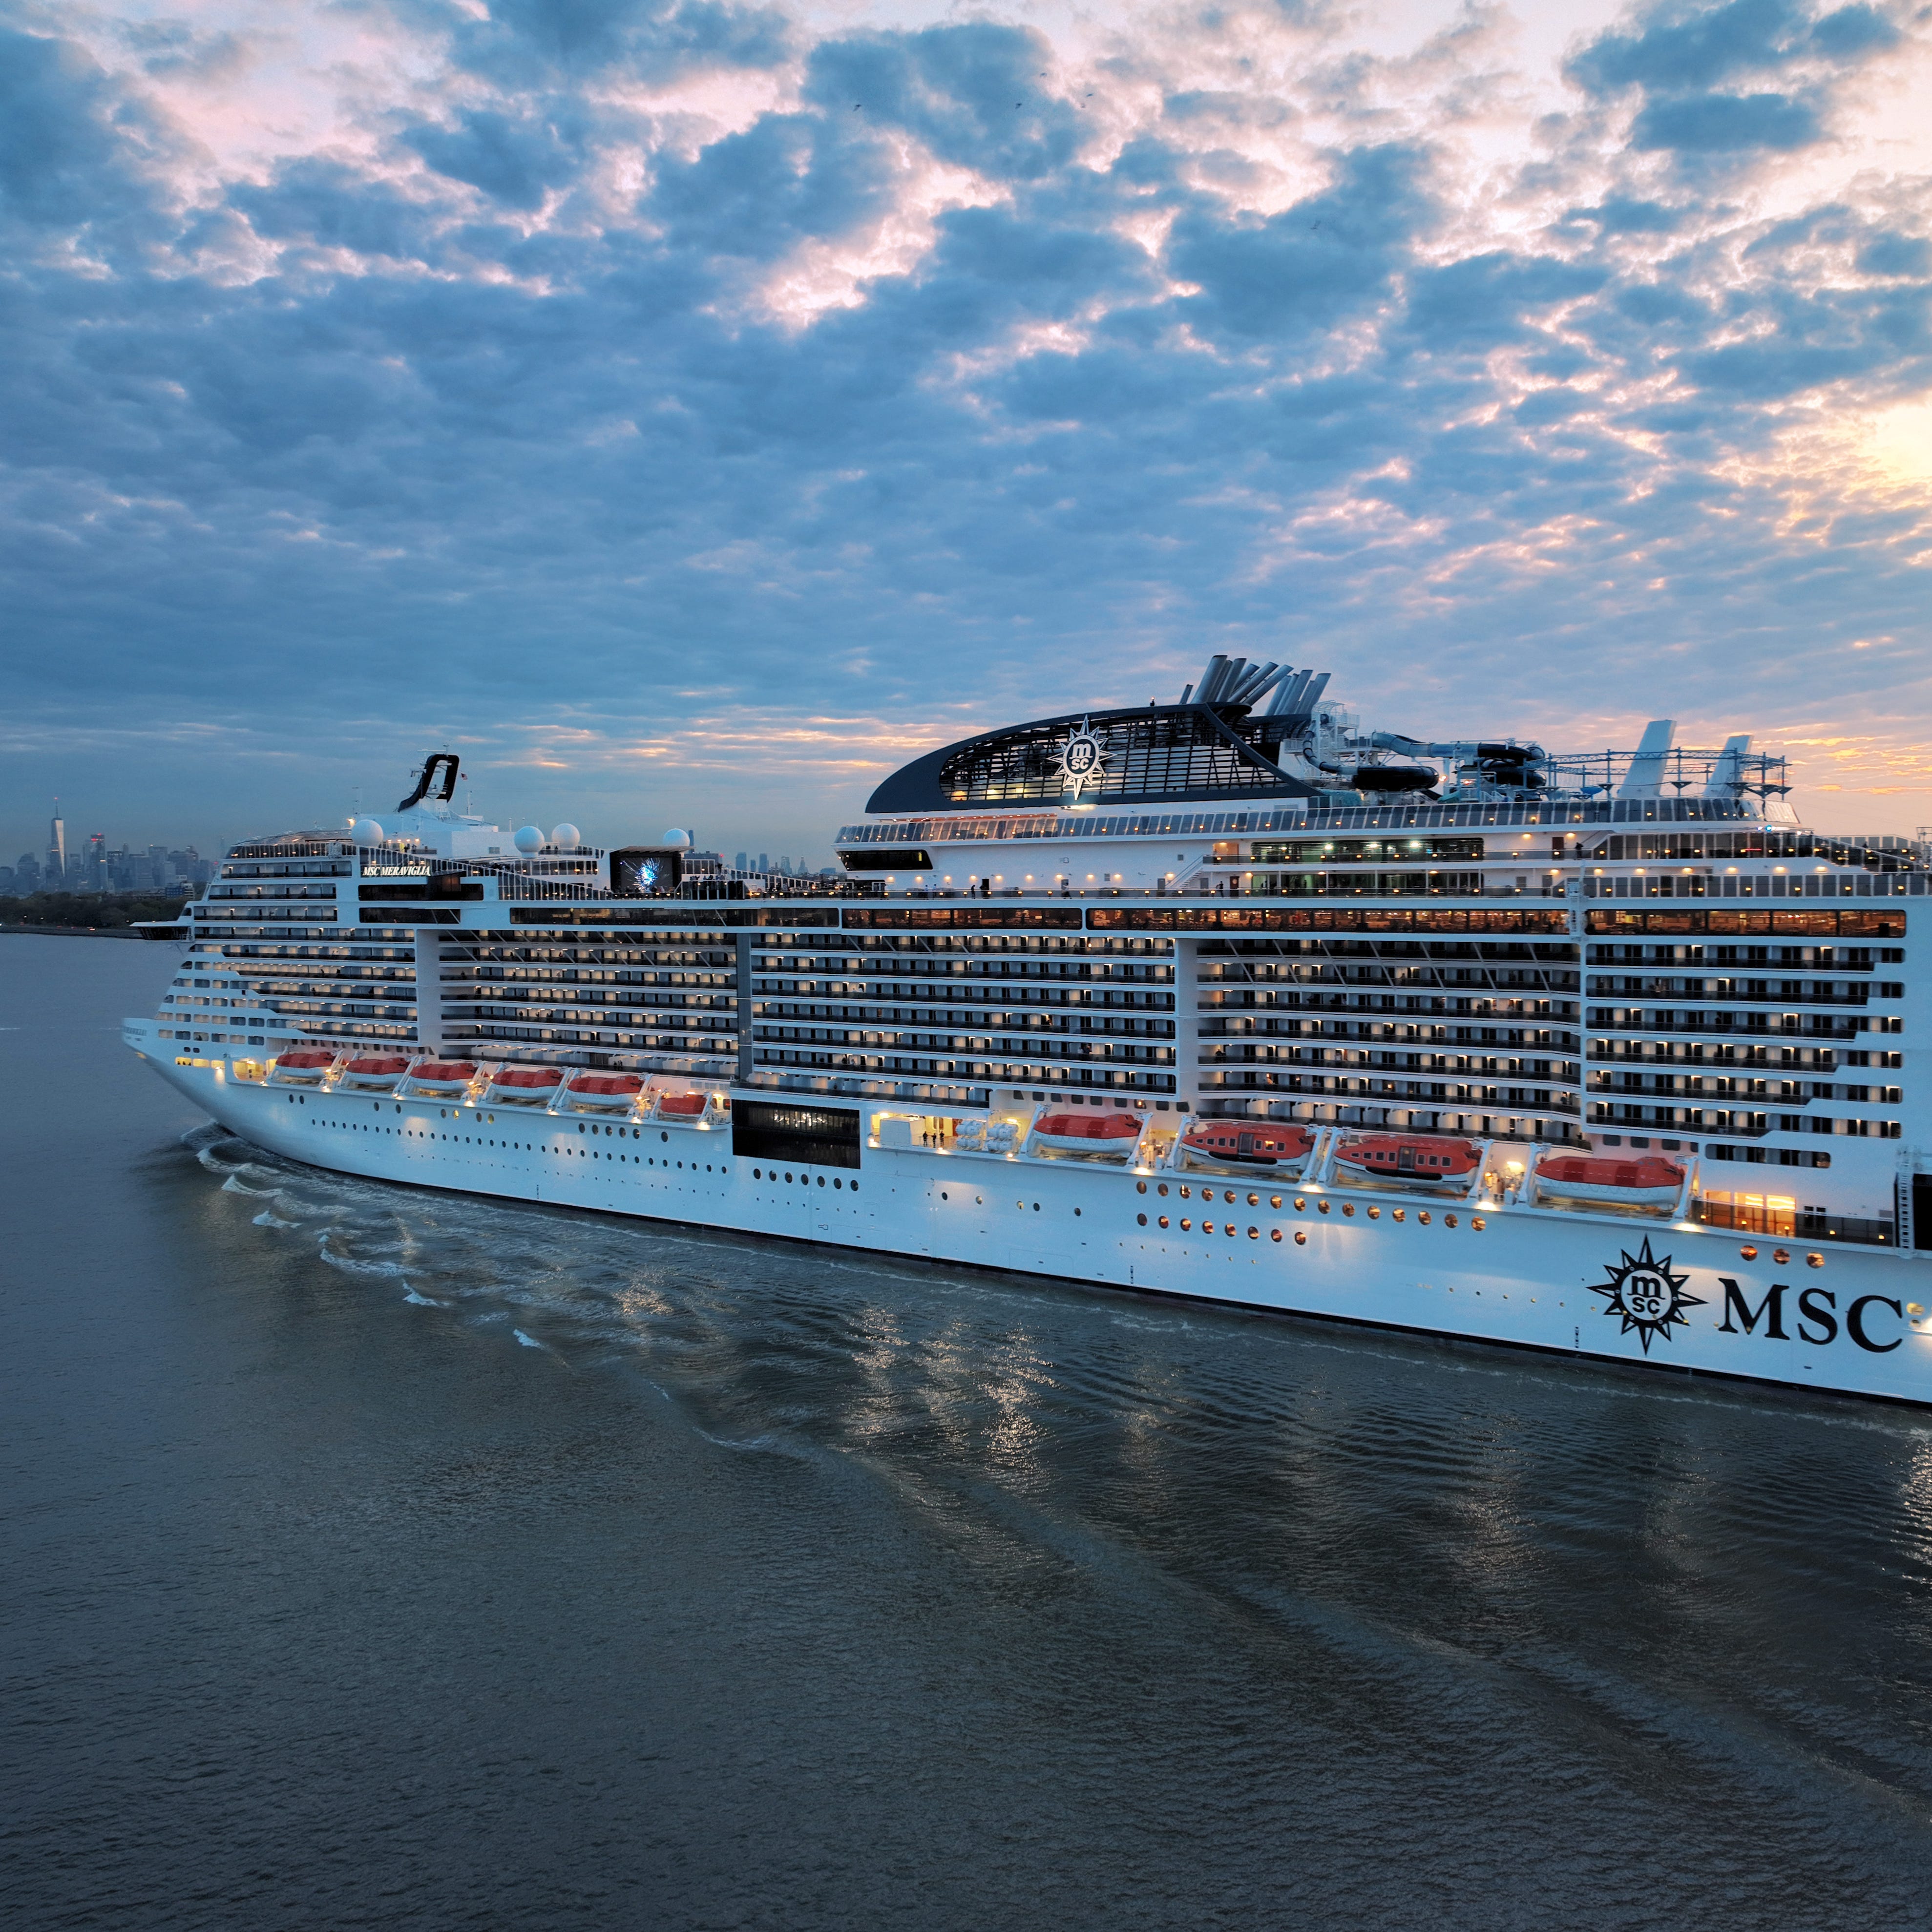 MSC Meraviglia enters New York Harbor.